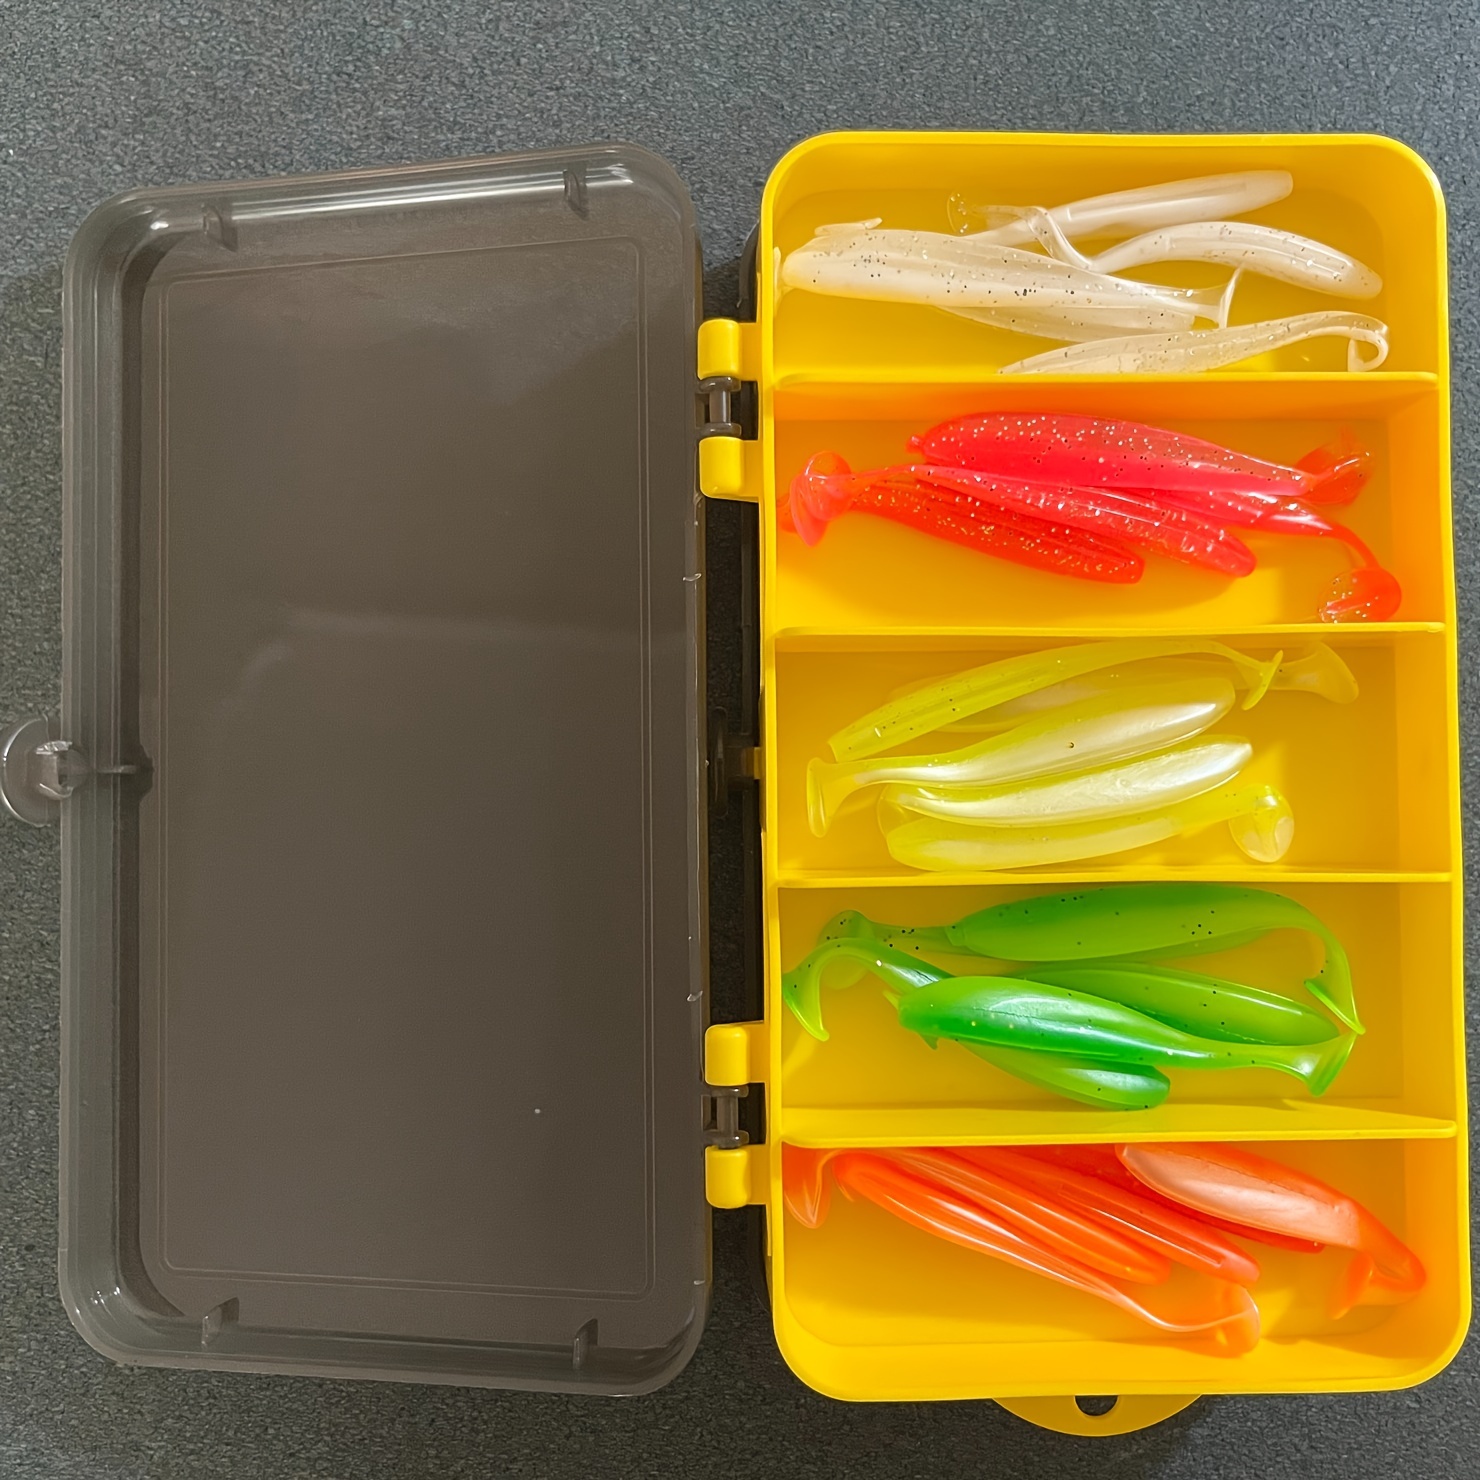 Zide 181pcs Fishing Lures Kit Soft Artificial Plastic Swimbaits Set Tackle  Box